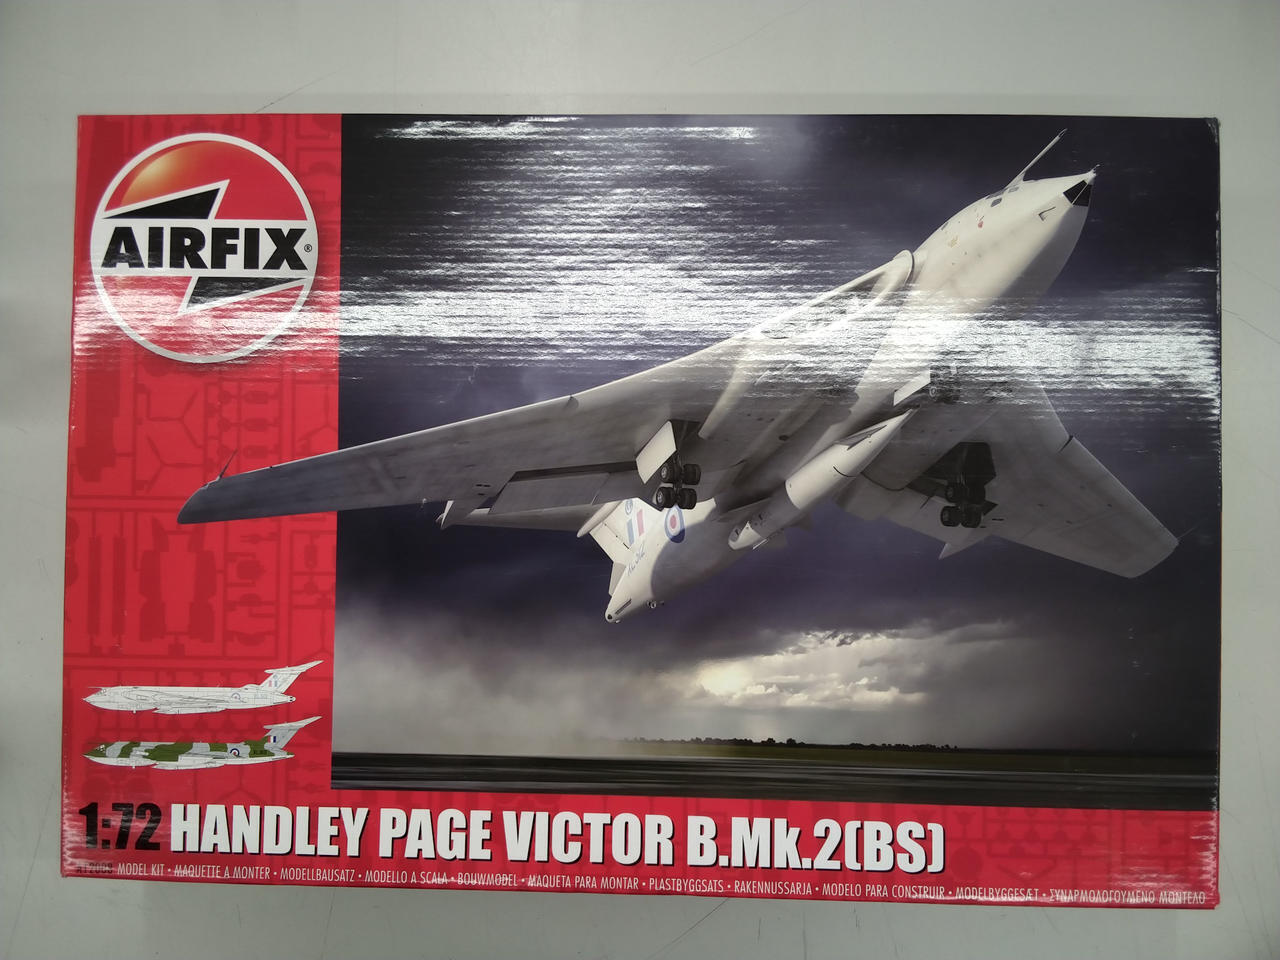 Airfix 1/72 Handley Page Victor B.Mk. Plastic Model